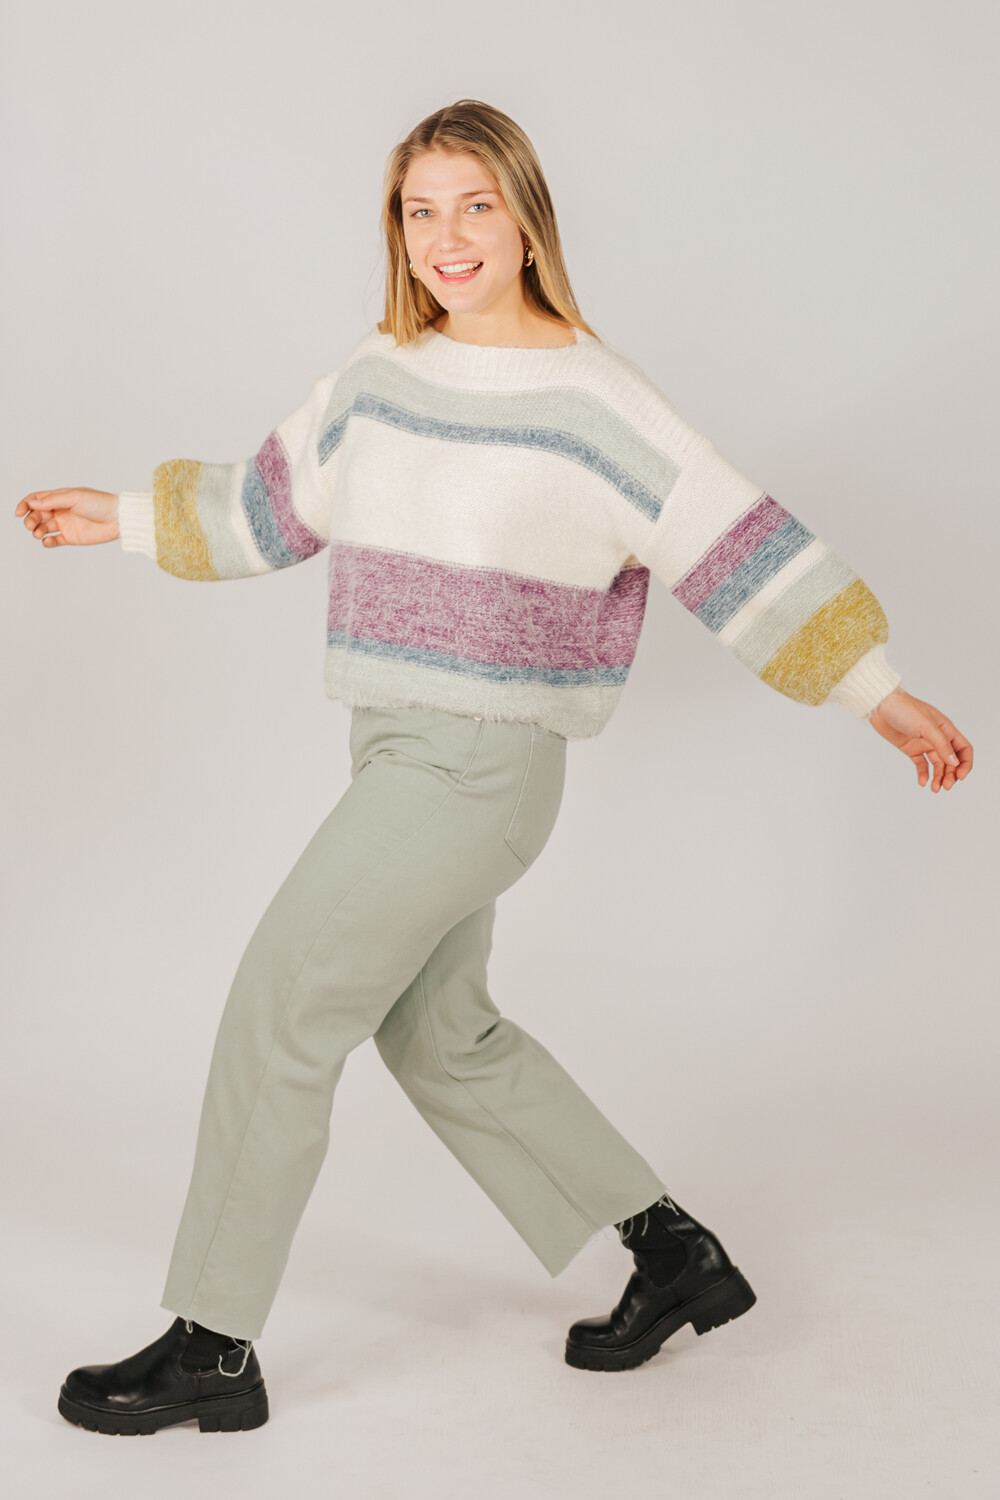 Sweater Fenix Estampado 1